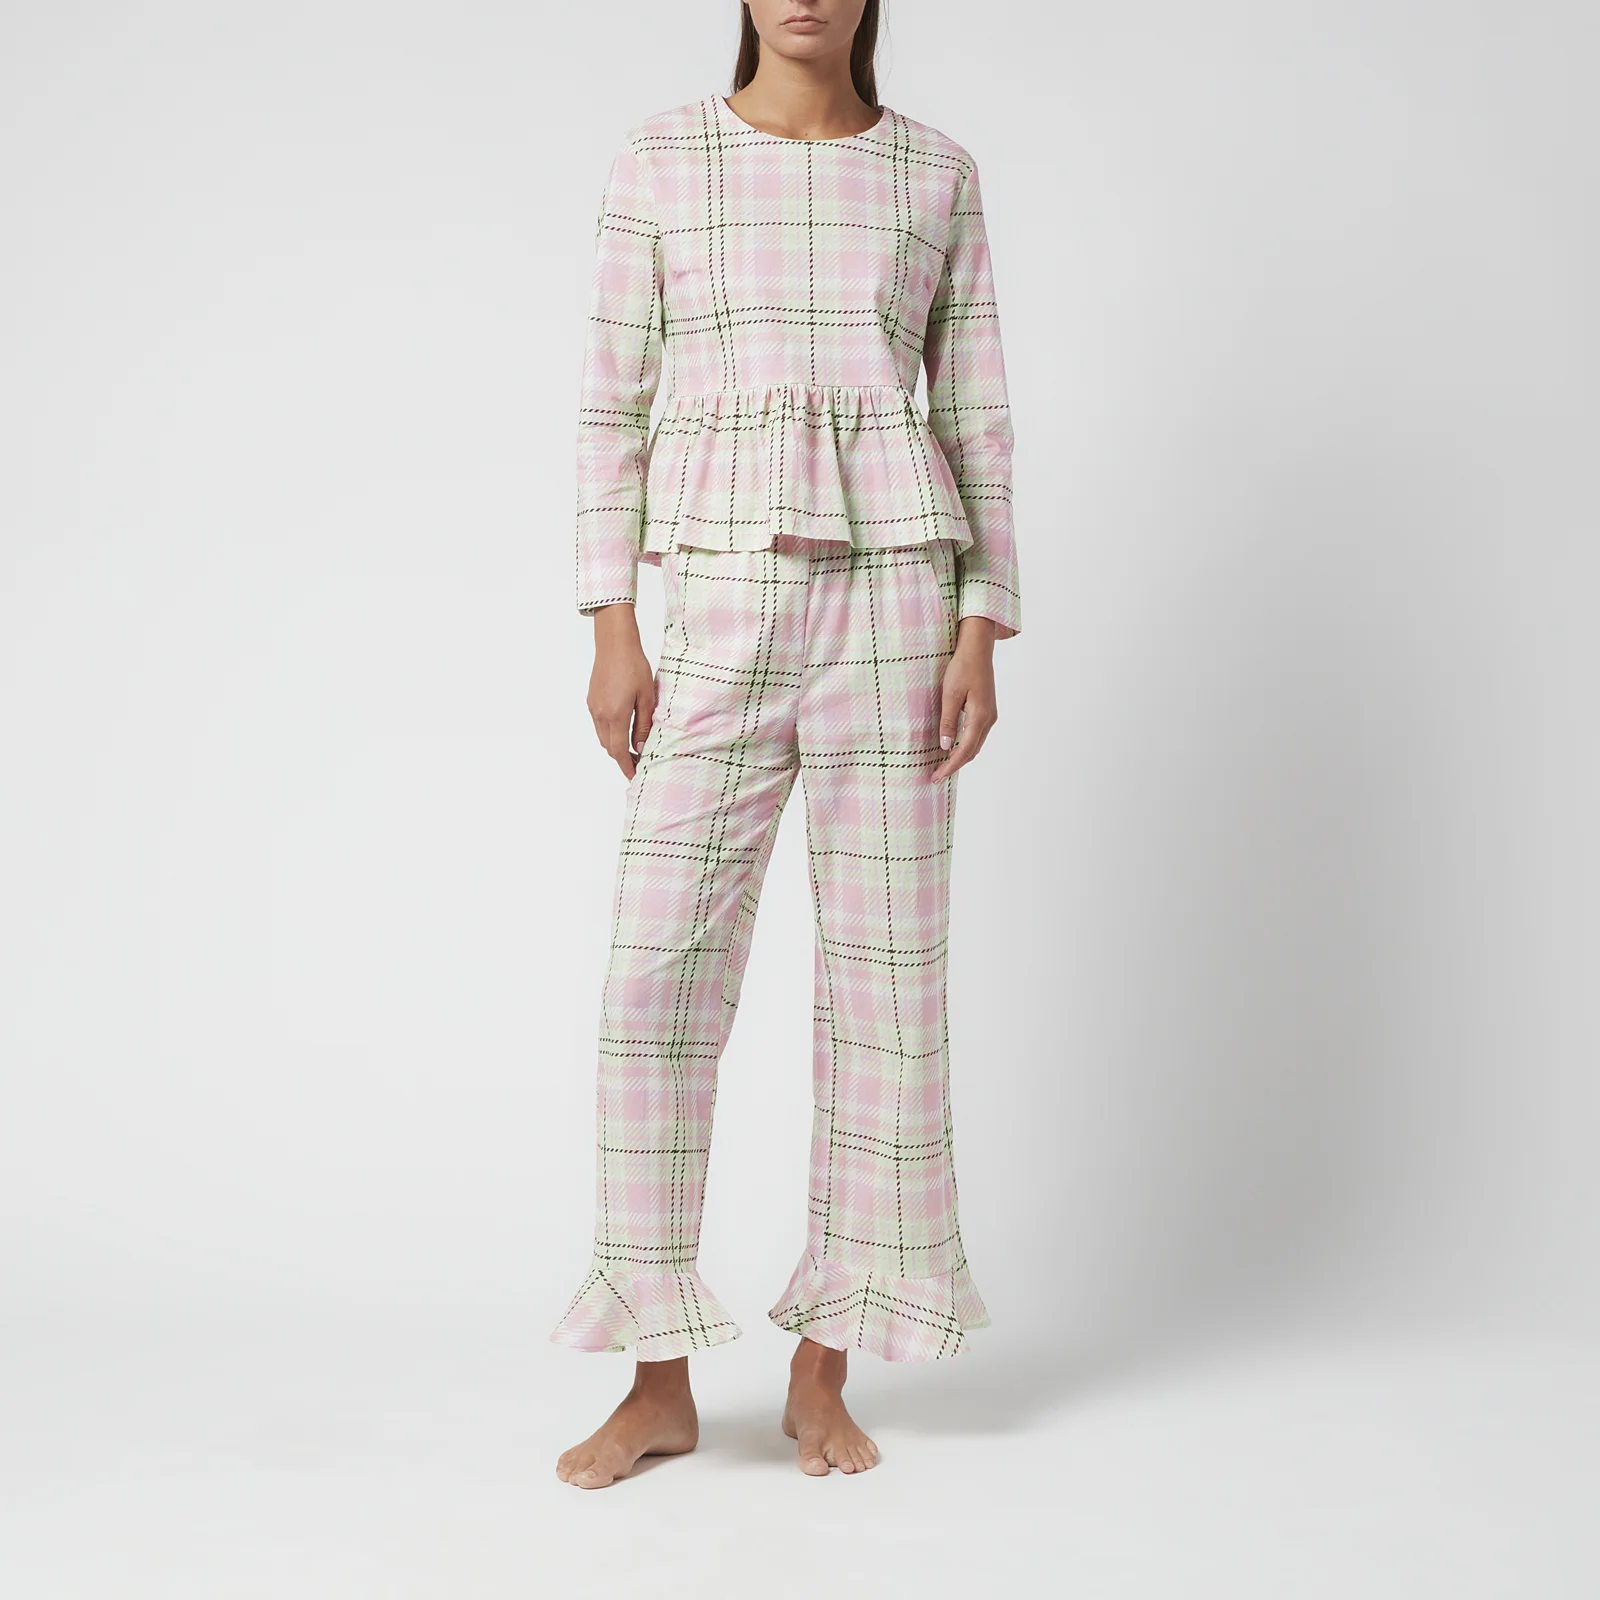 Olivia Rubin Women's Marianne Pyjamas - Pink Green Check Image 1